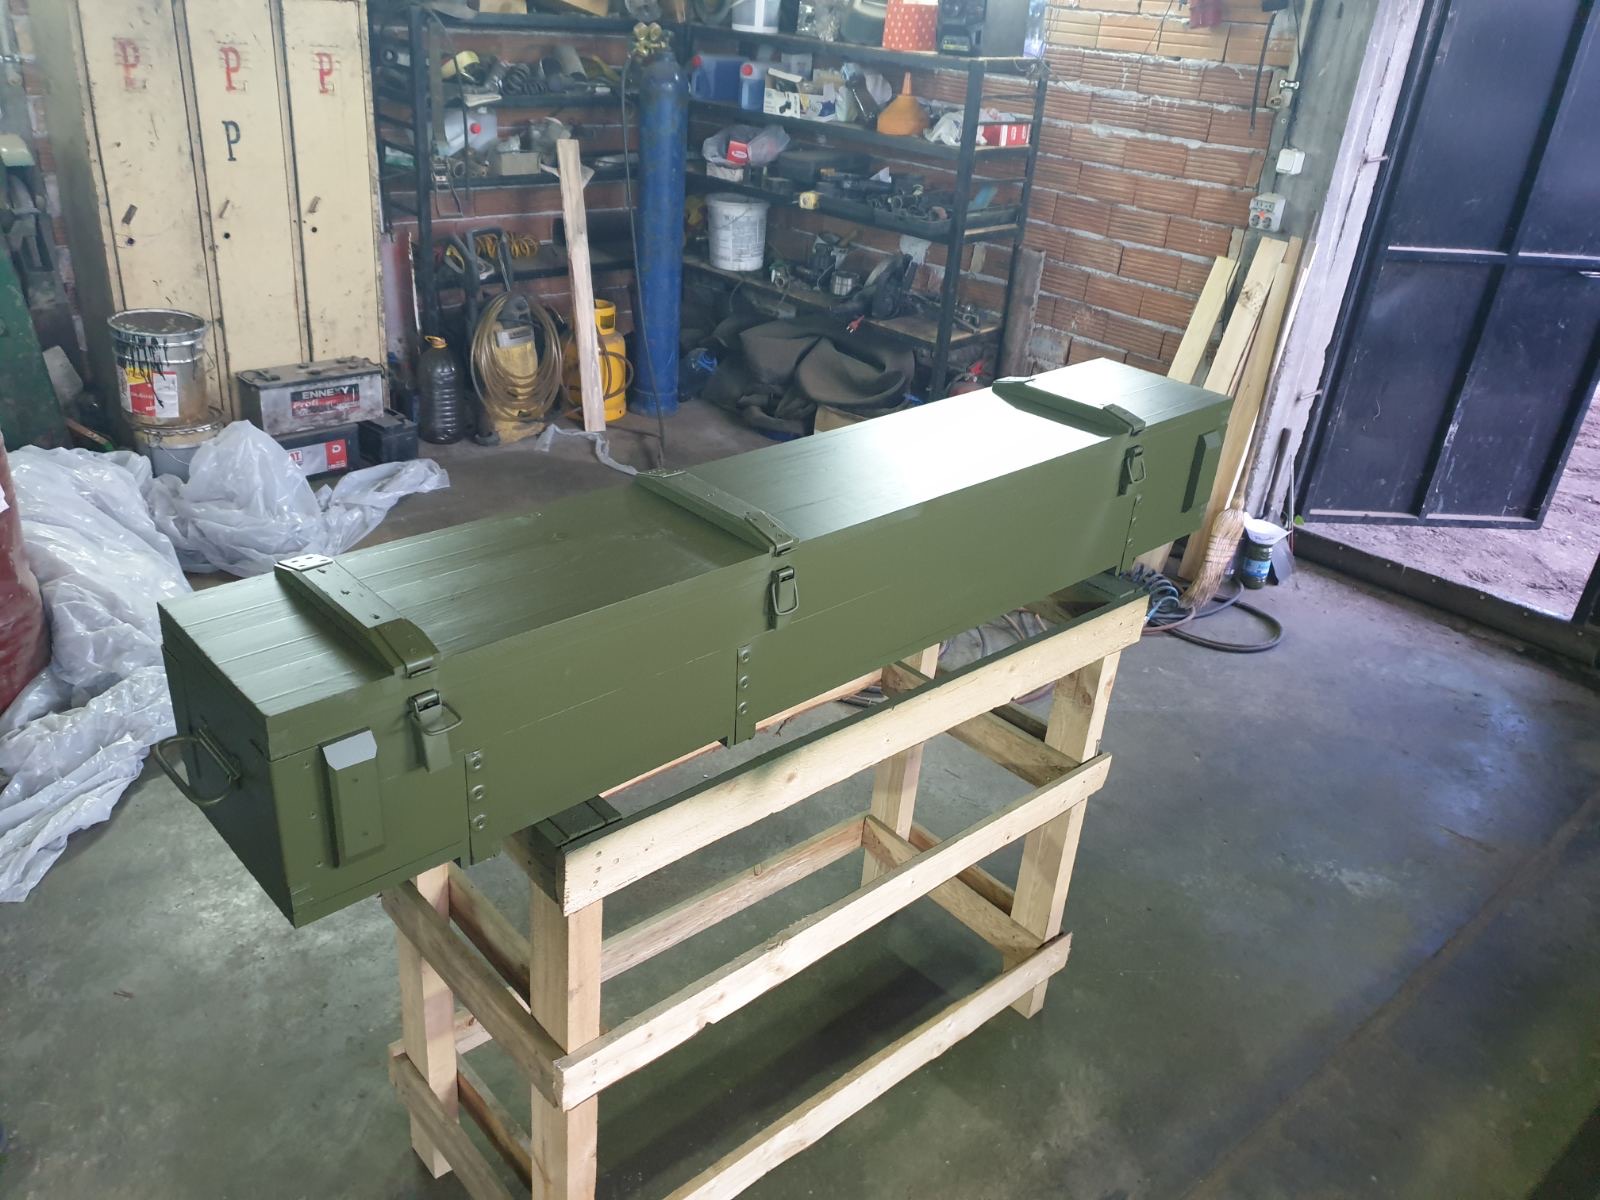 Ammunitions & arms crates/boxes